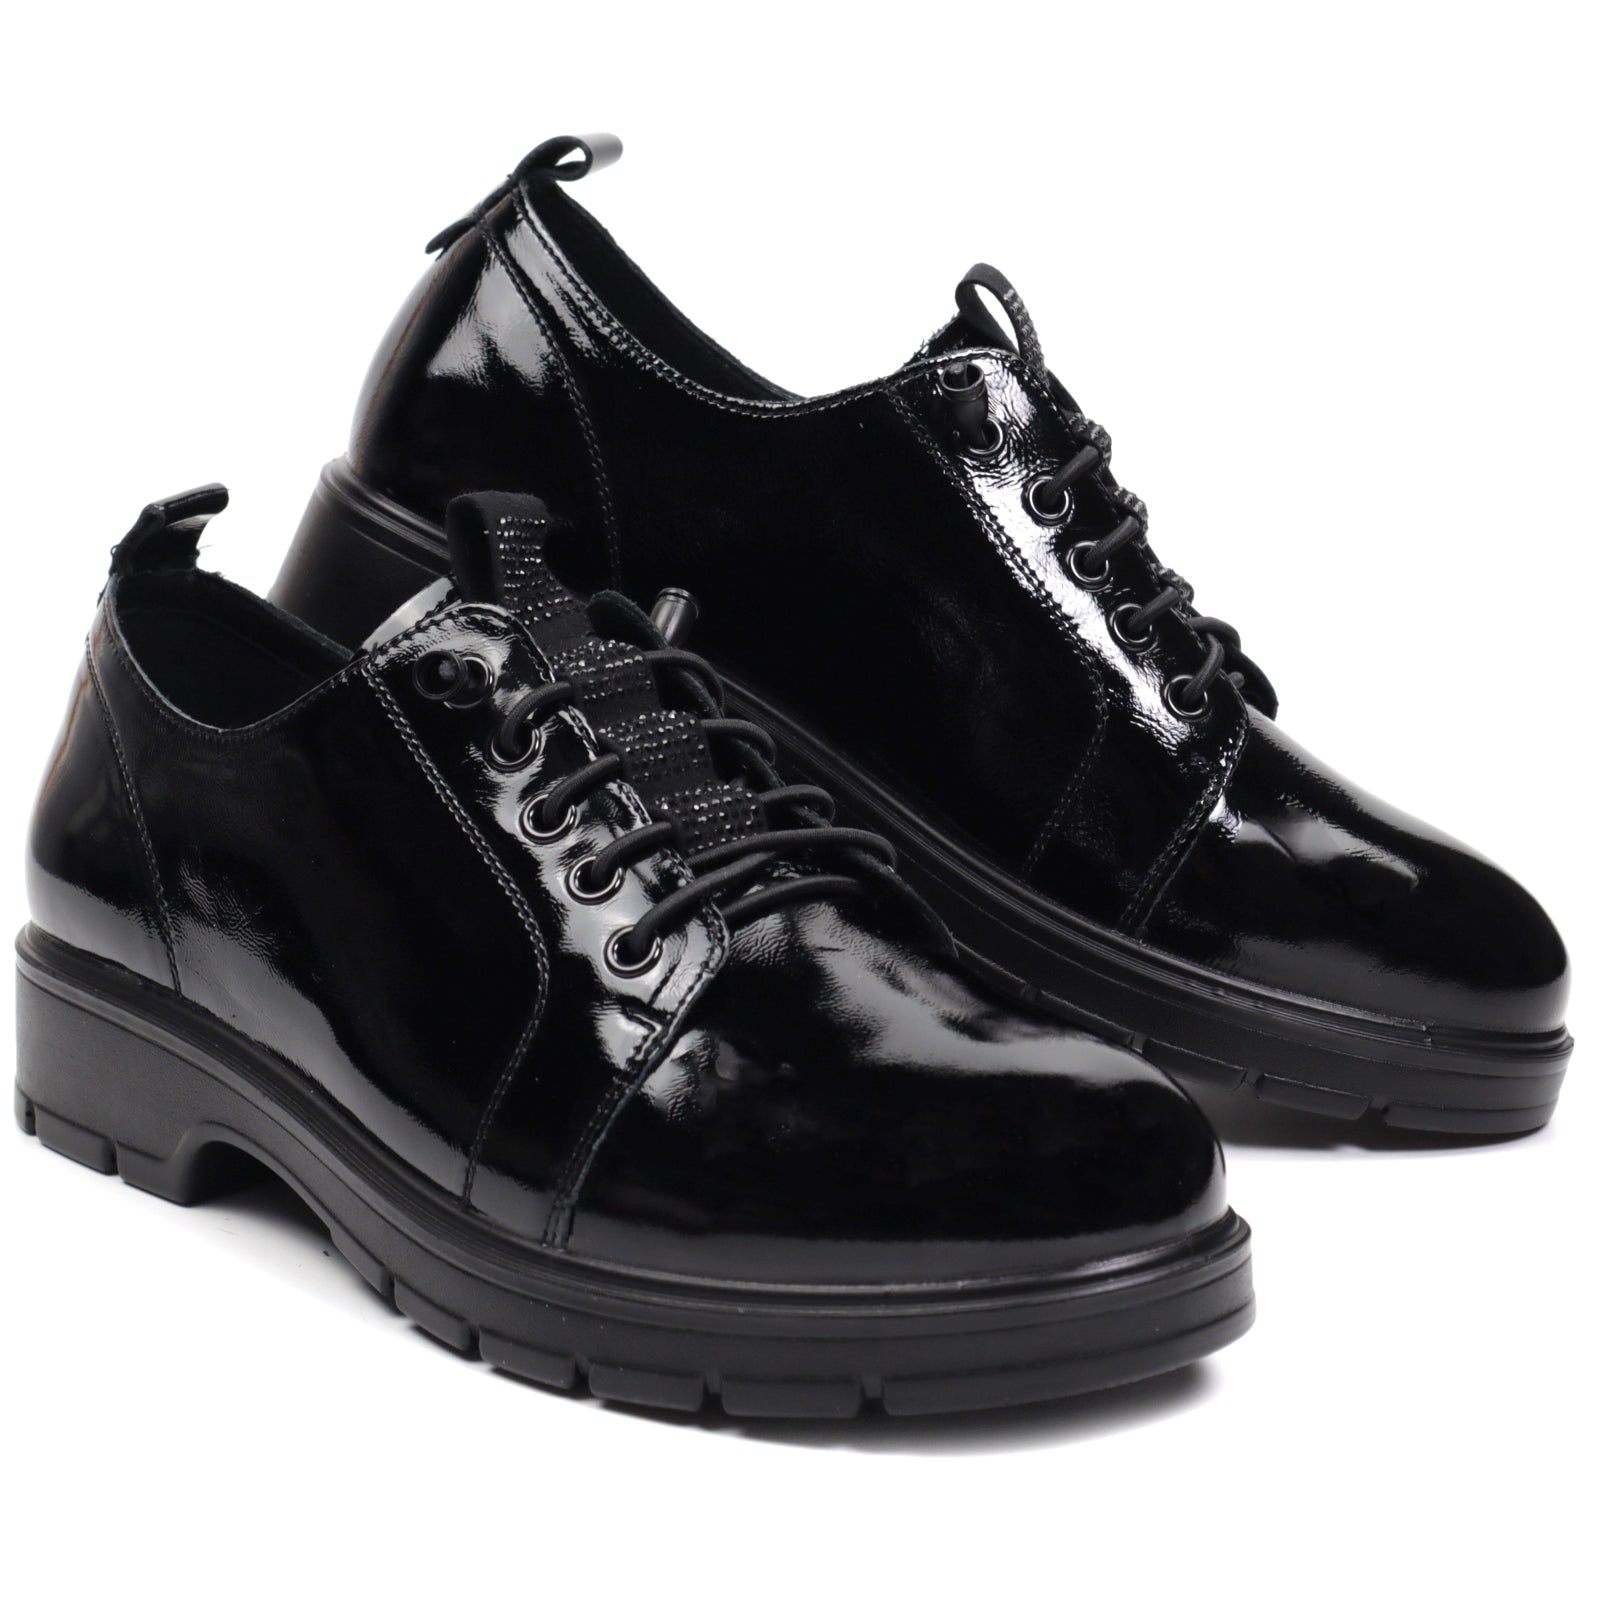 Pass Collection Pantofi dama X4X430011A 01 L negru lac ID3594-NGL